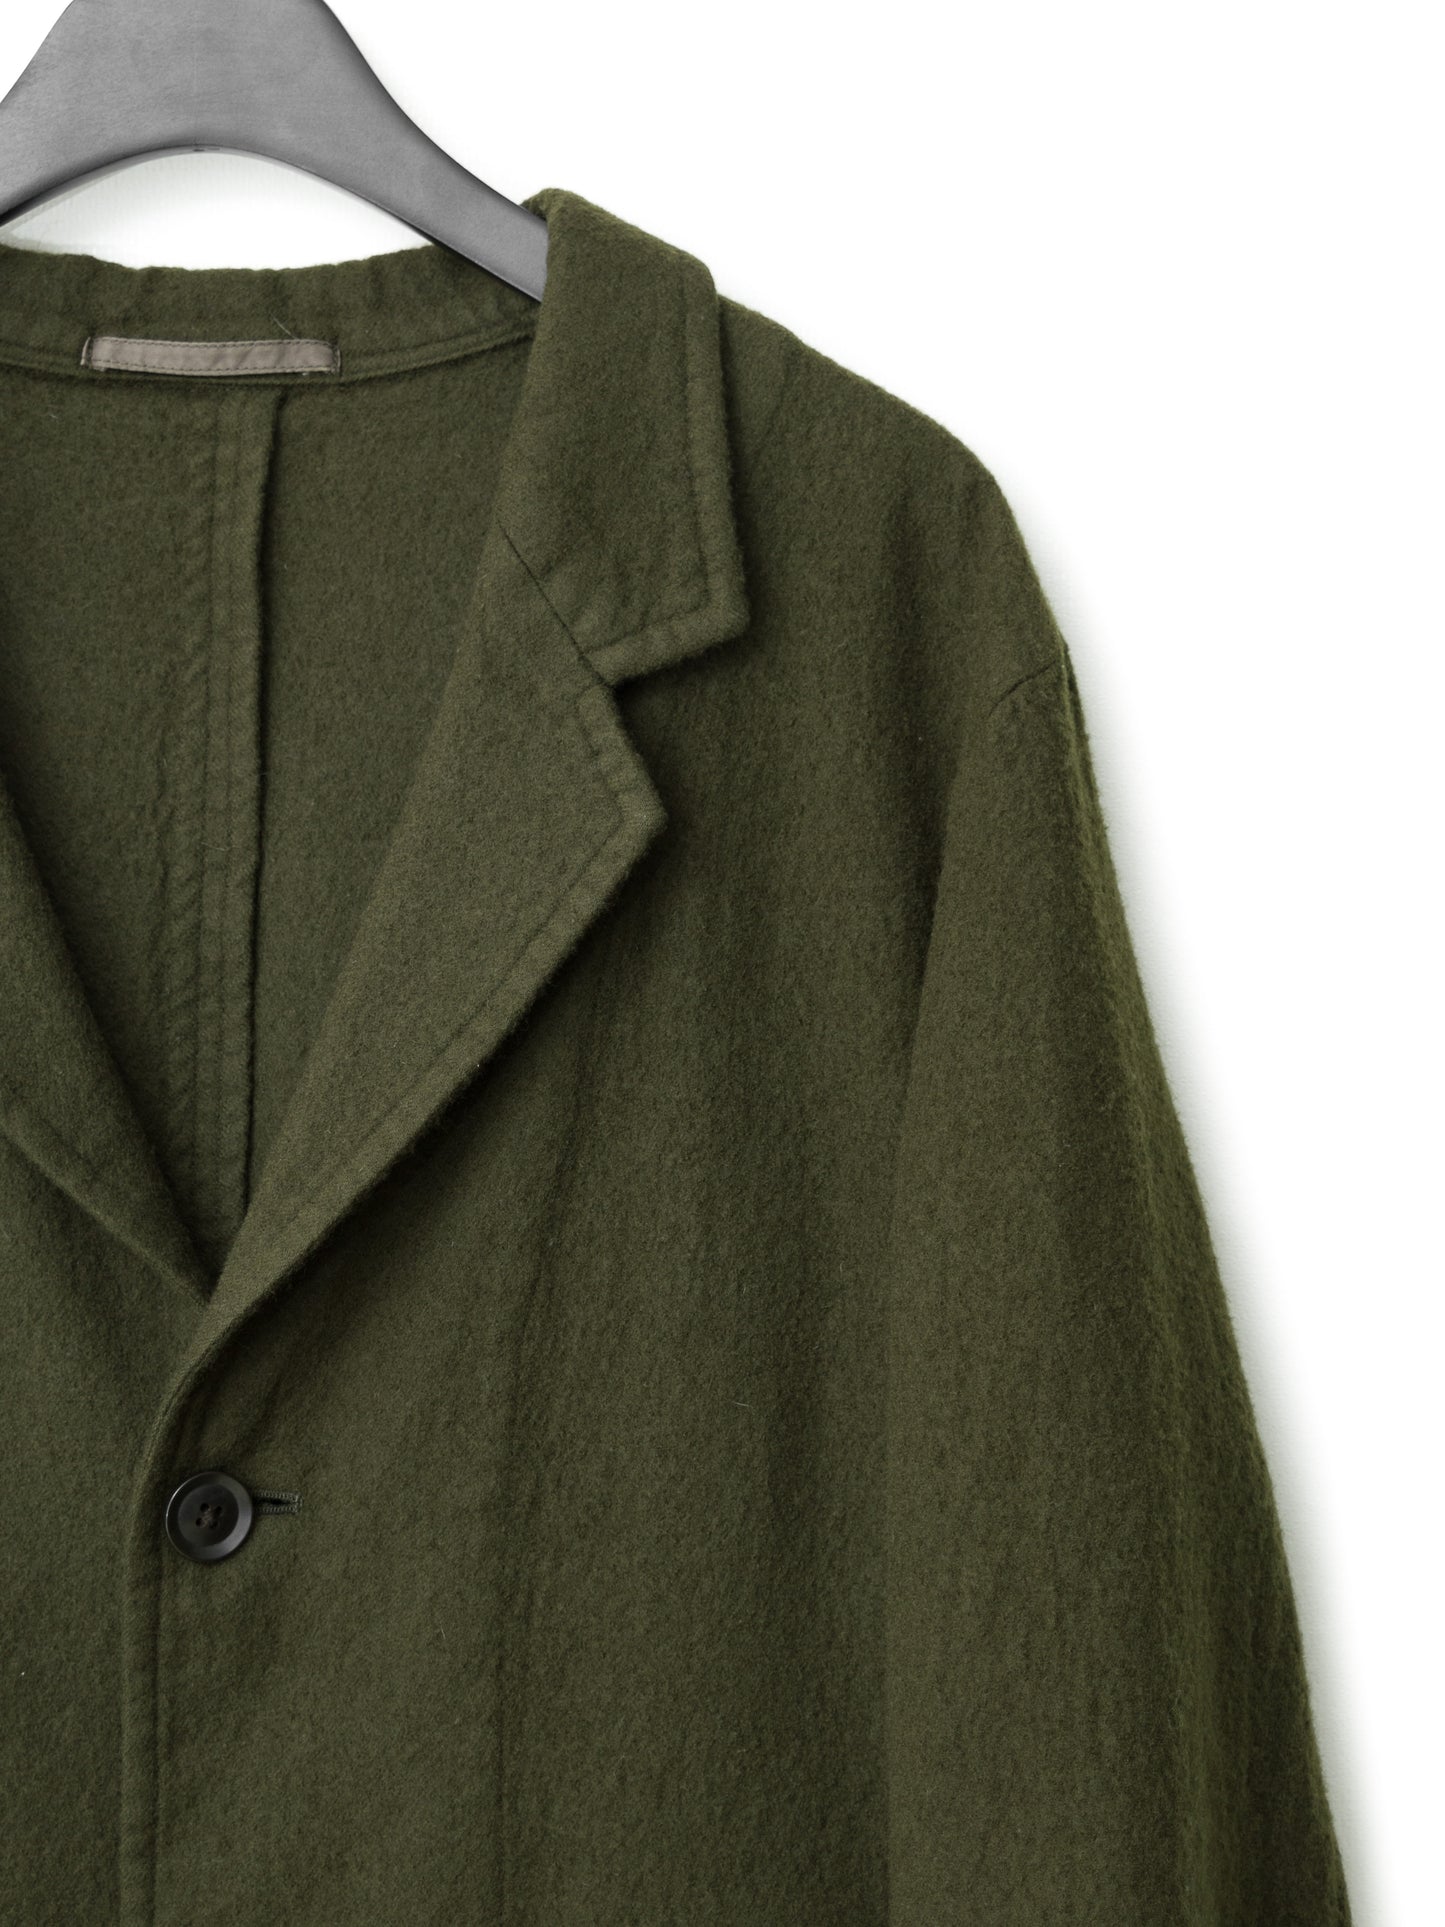 tailored hunting jacket moss ∙ shrunken wool ∙ small